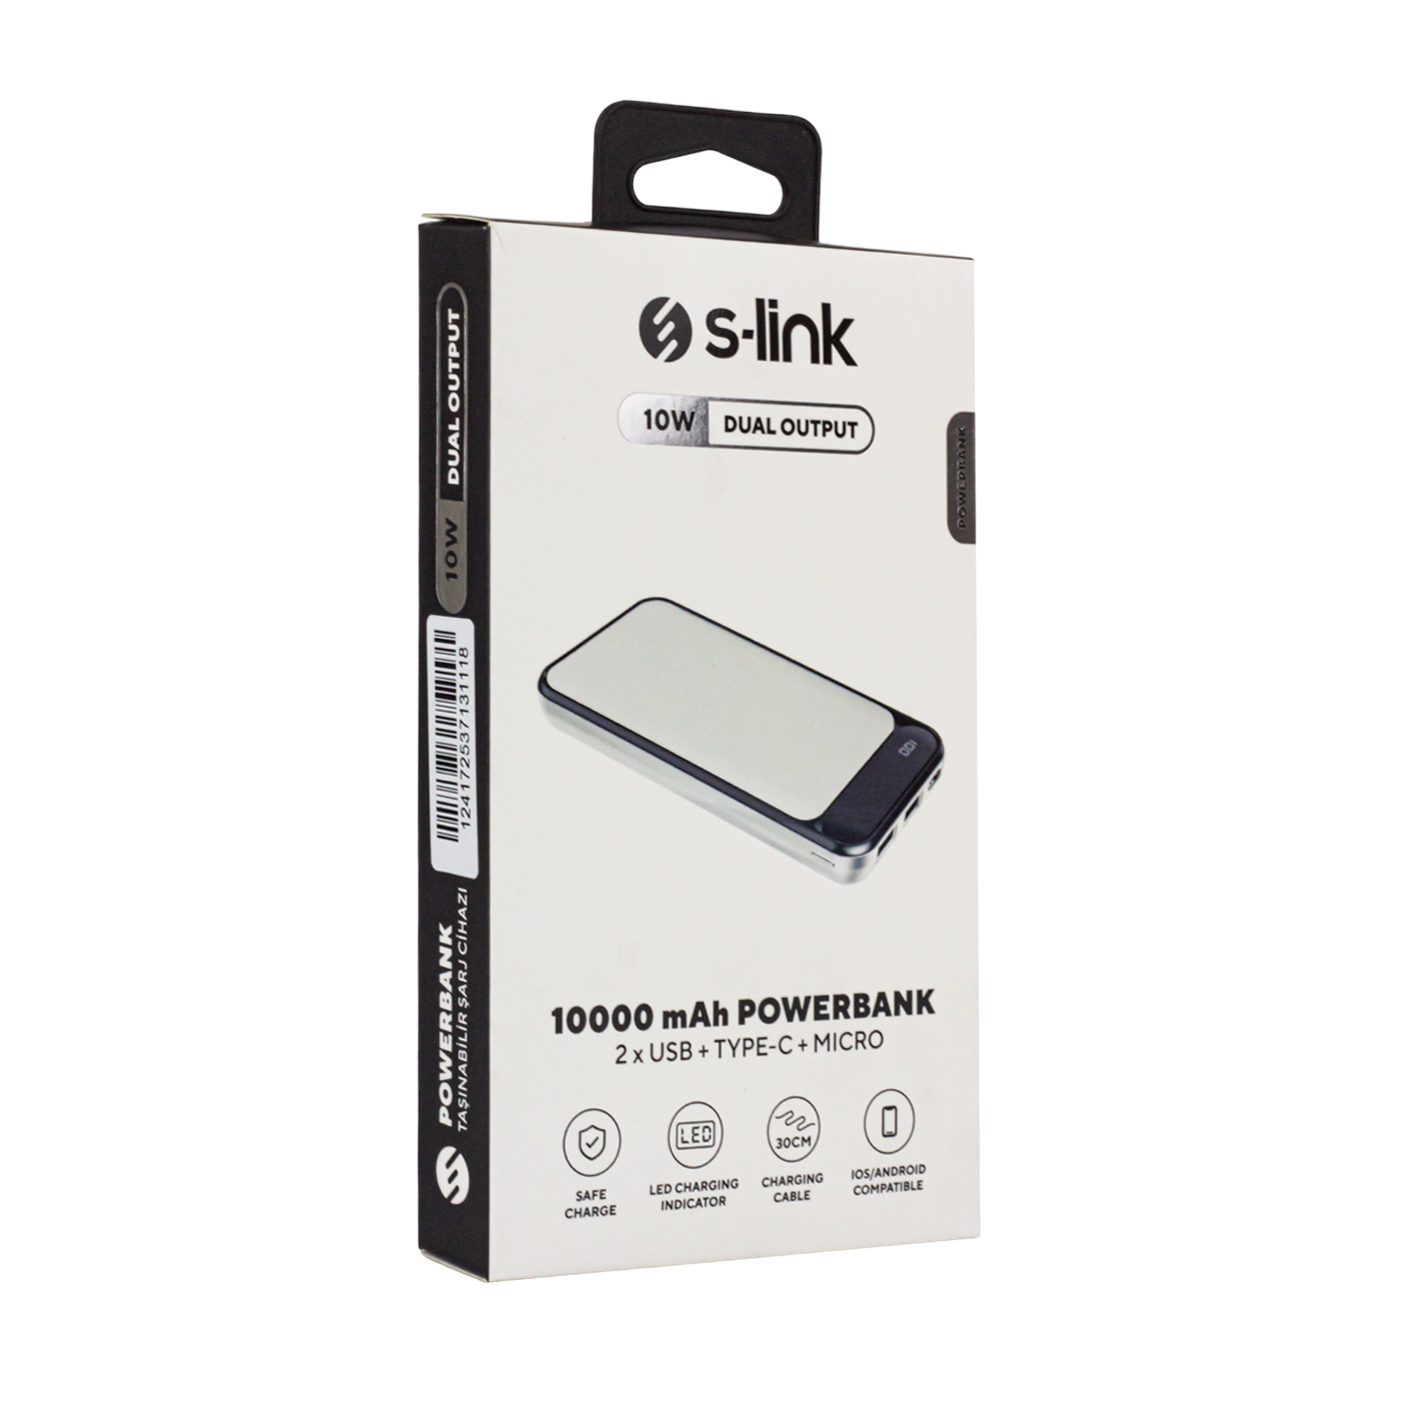 CLZ192 S-LINK IP-G2710 10000MAH POWERBANK 2 USB PORT BEYAZ LCD GÖSTERGELİ POWERBANK (4172)